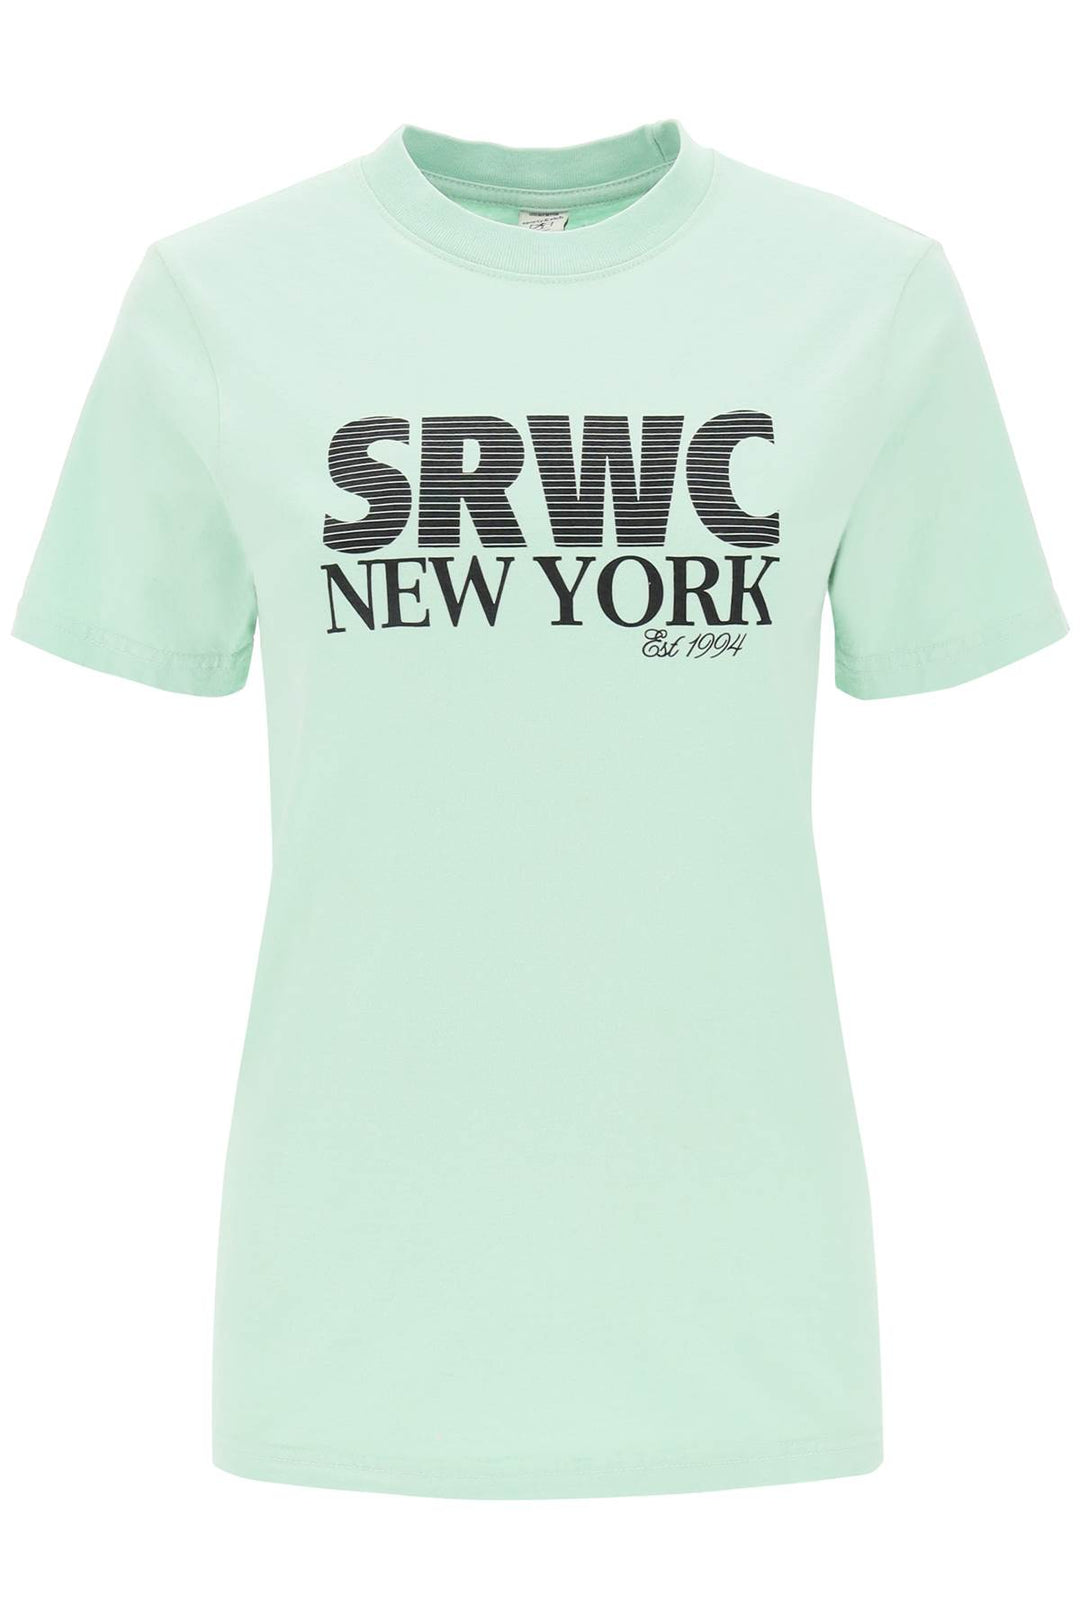 Sporty rich srwc 94 t-shirt-0